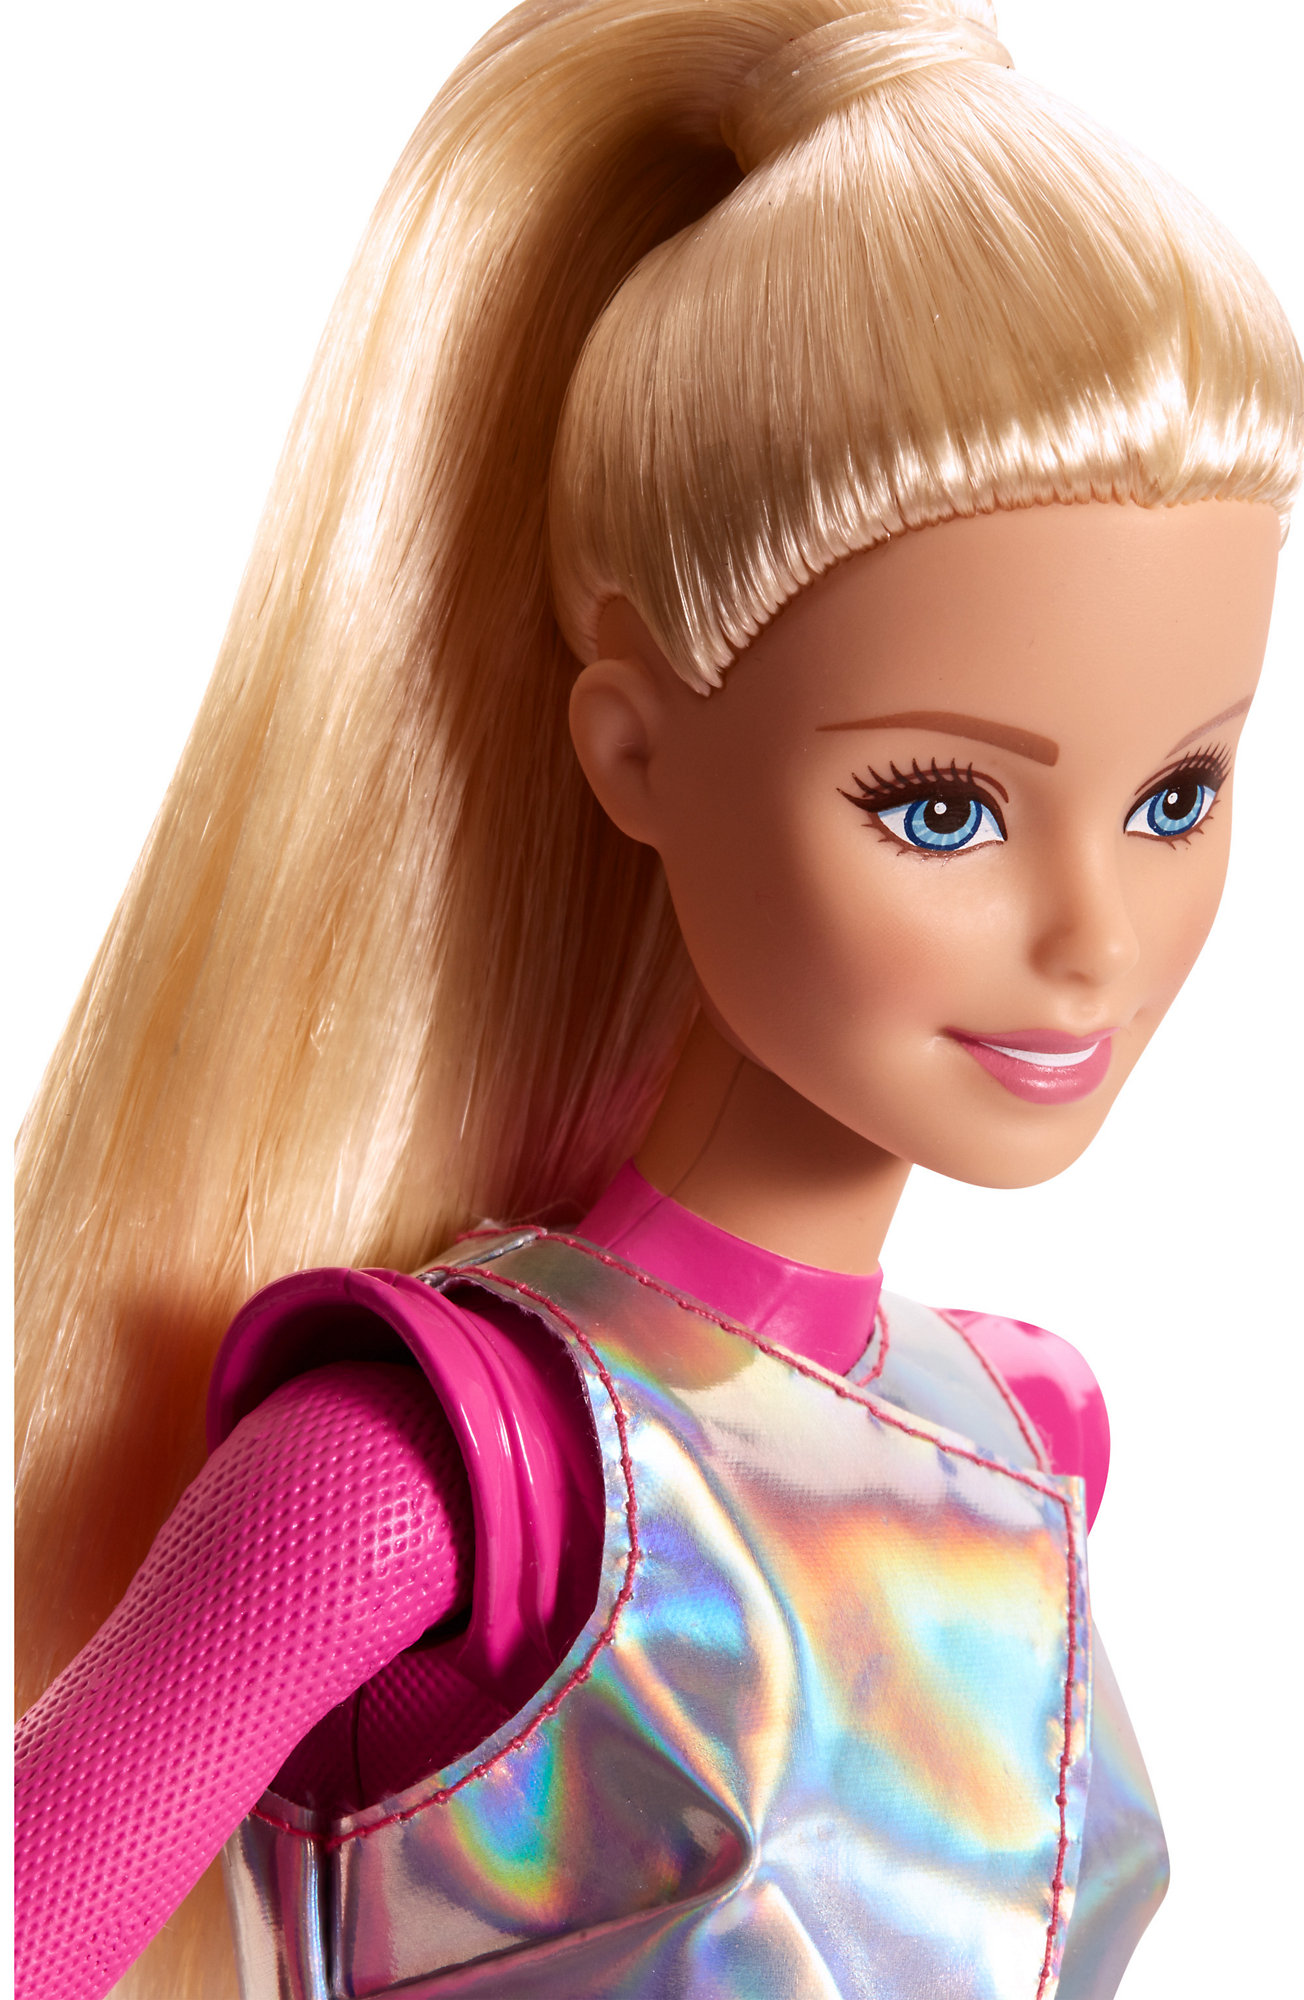 Barbie Star Light Adventure Galaxy Barbie Doll